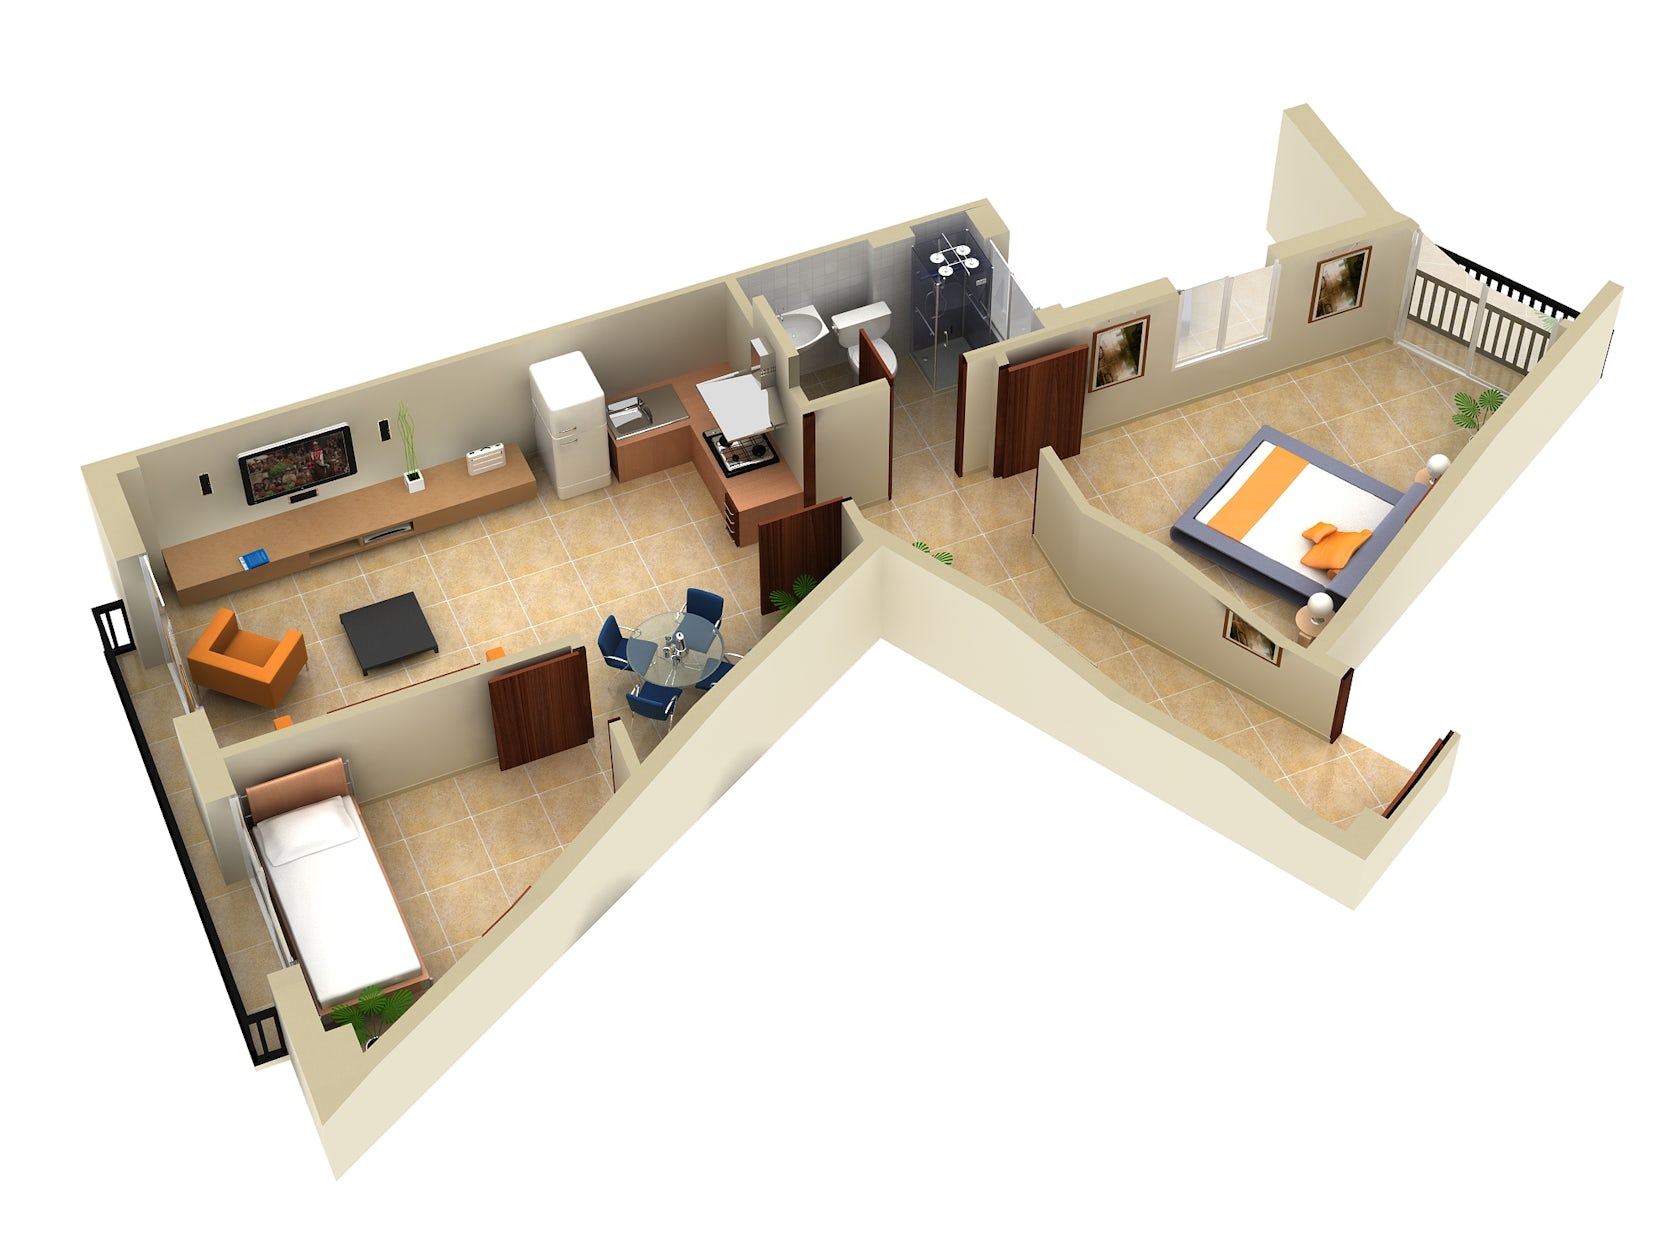 3D House Floor Plan Design & Modeling by HiTech CADD